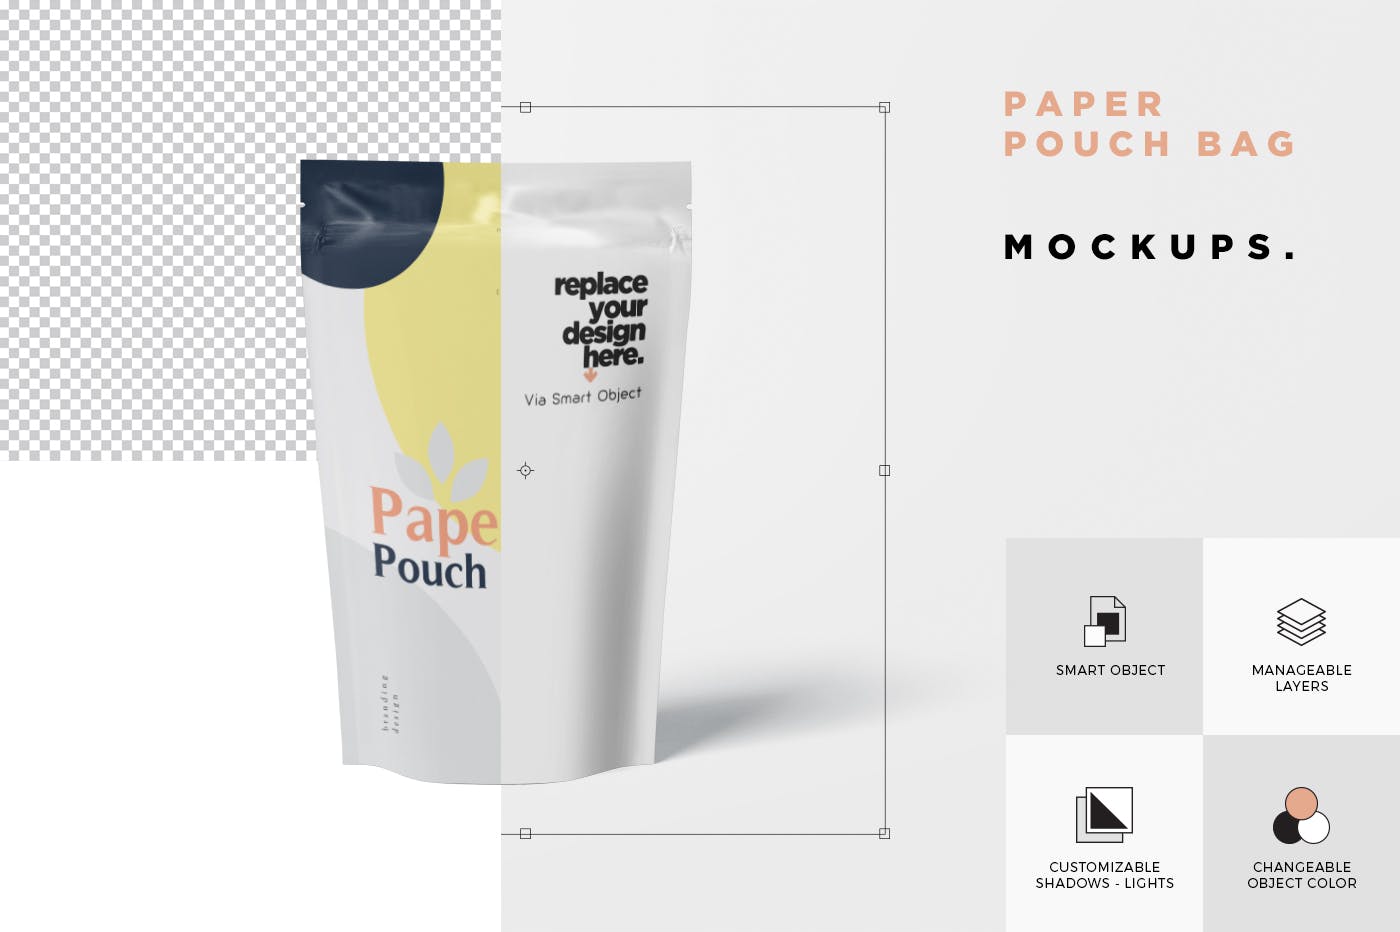 食品自封袋包装设计效果图非凡图库精选 Paper Pouch Bag Mockup – Large Size插图(5)